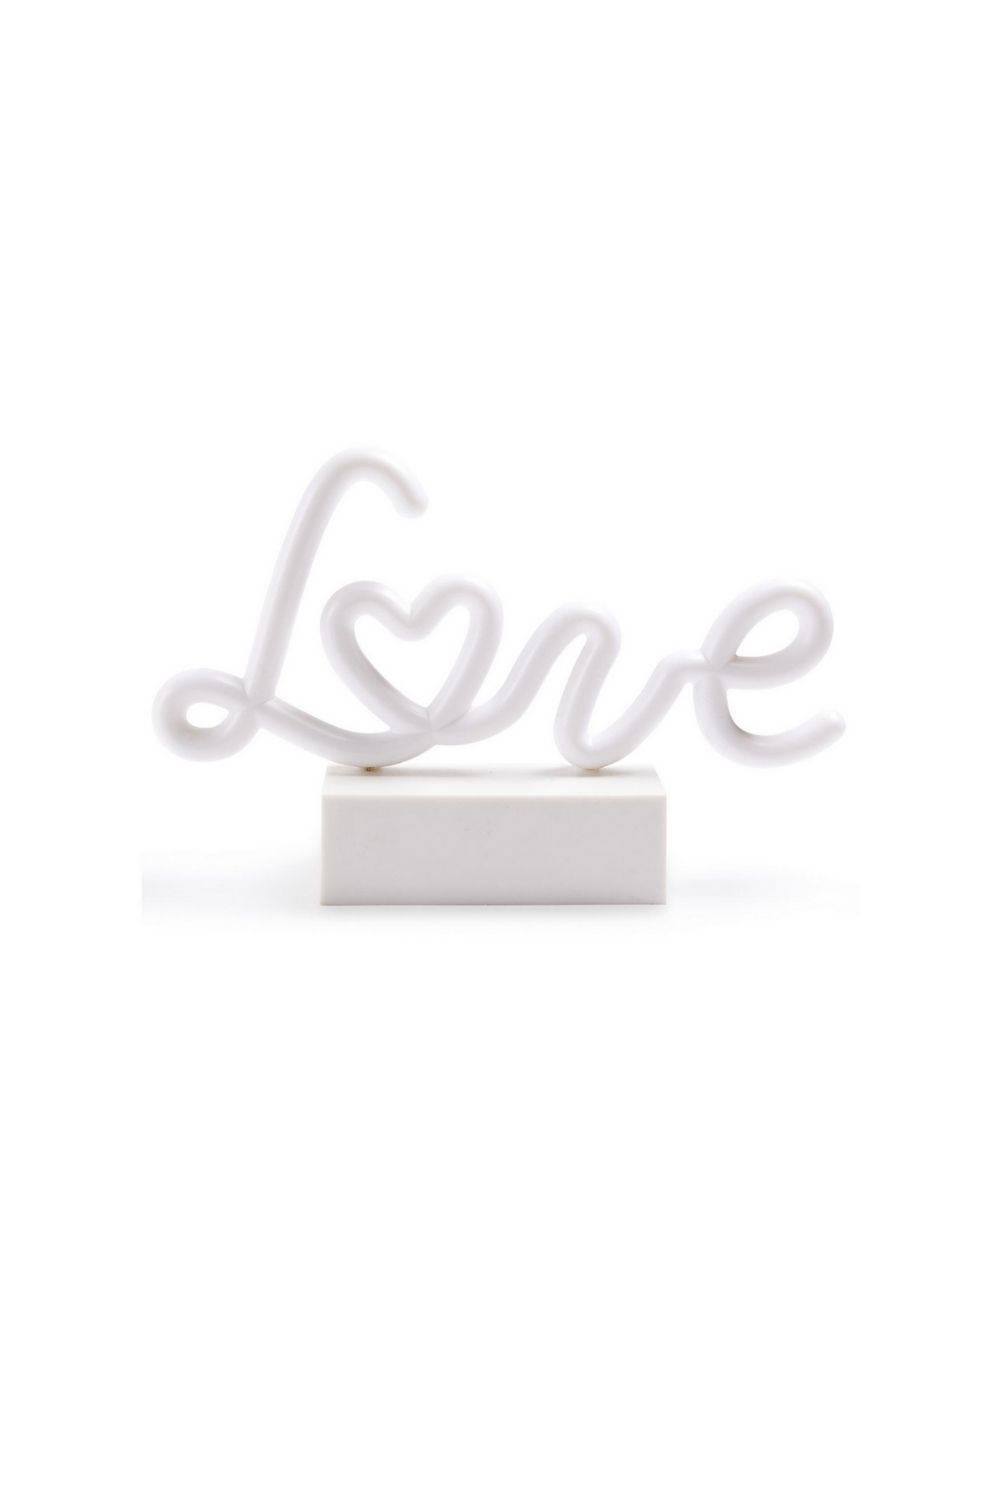 Luz de neón con mensaje «Love»